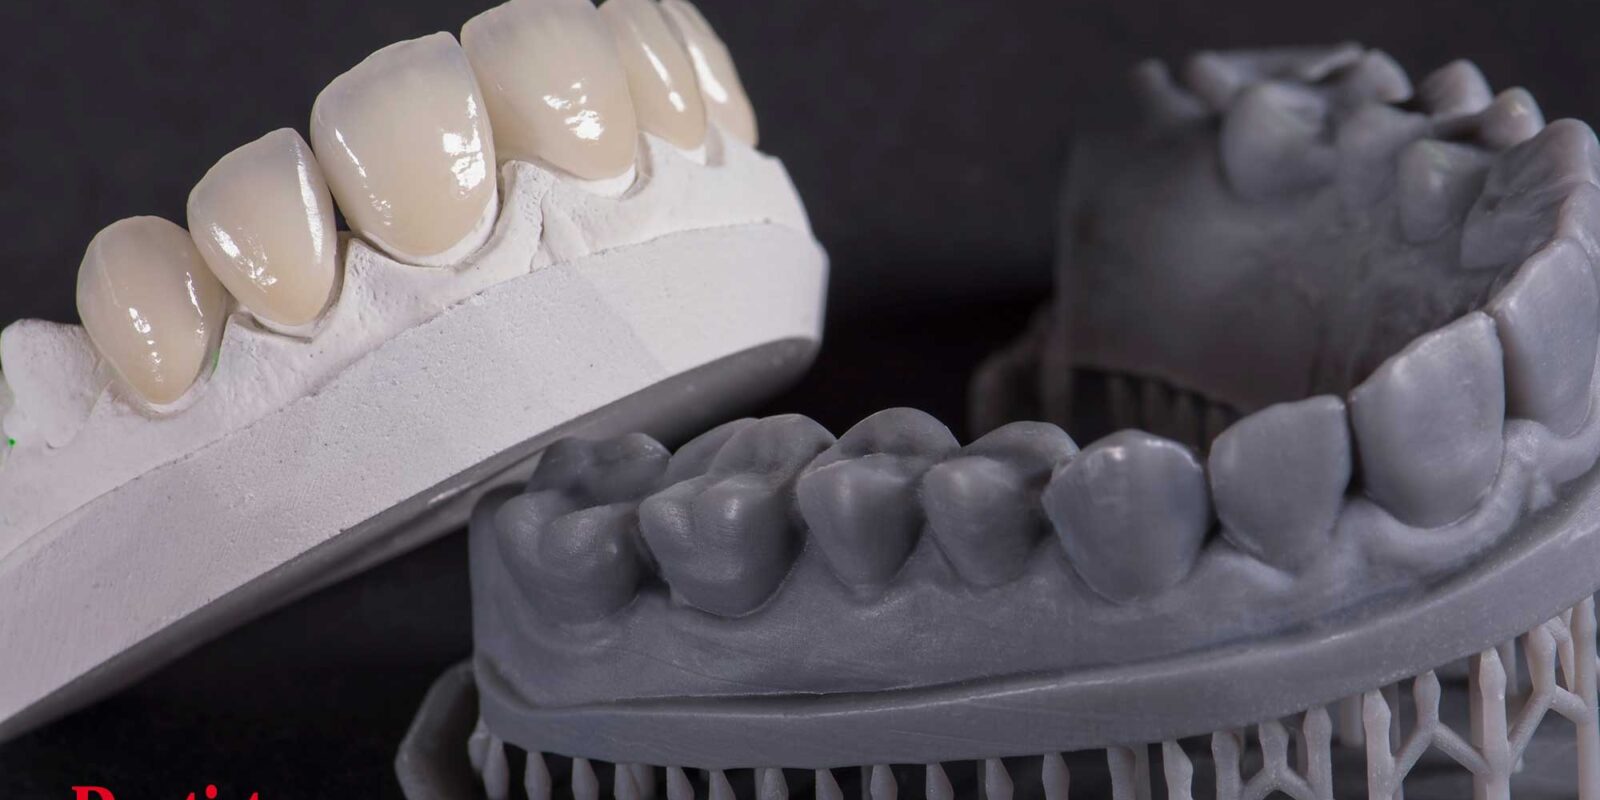 3D printing in dental